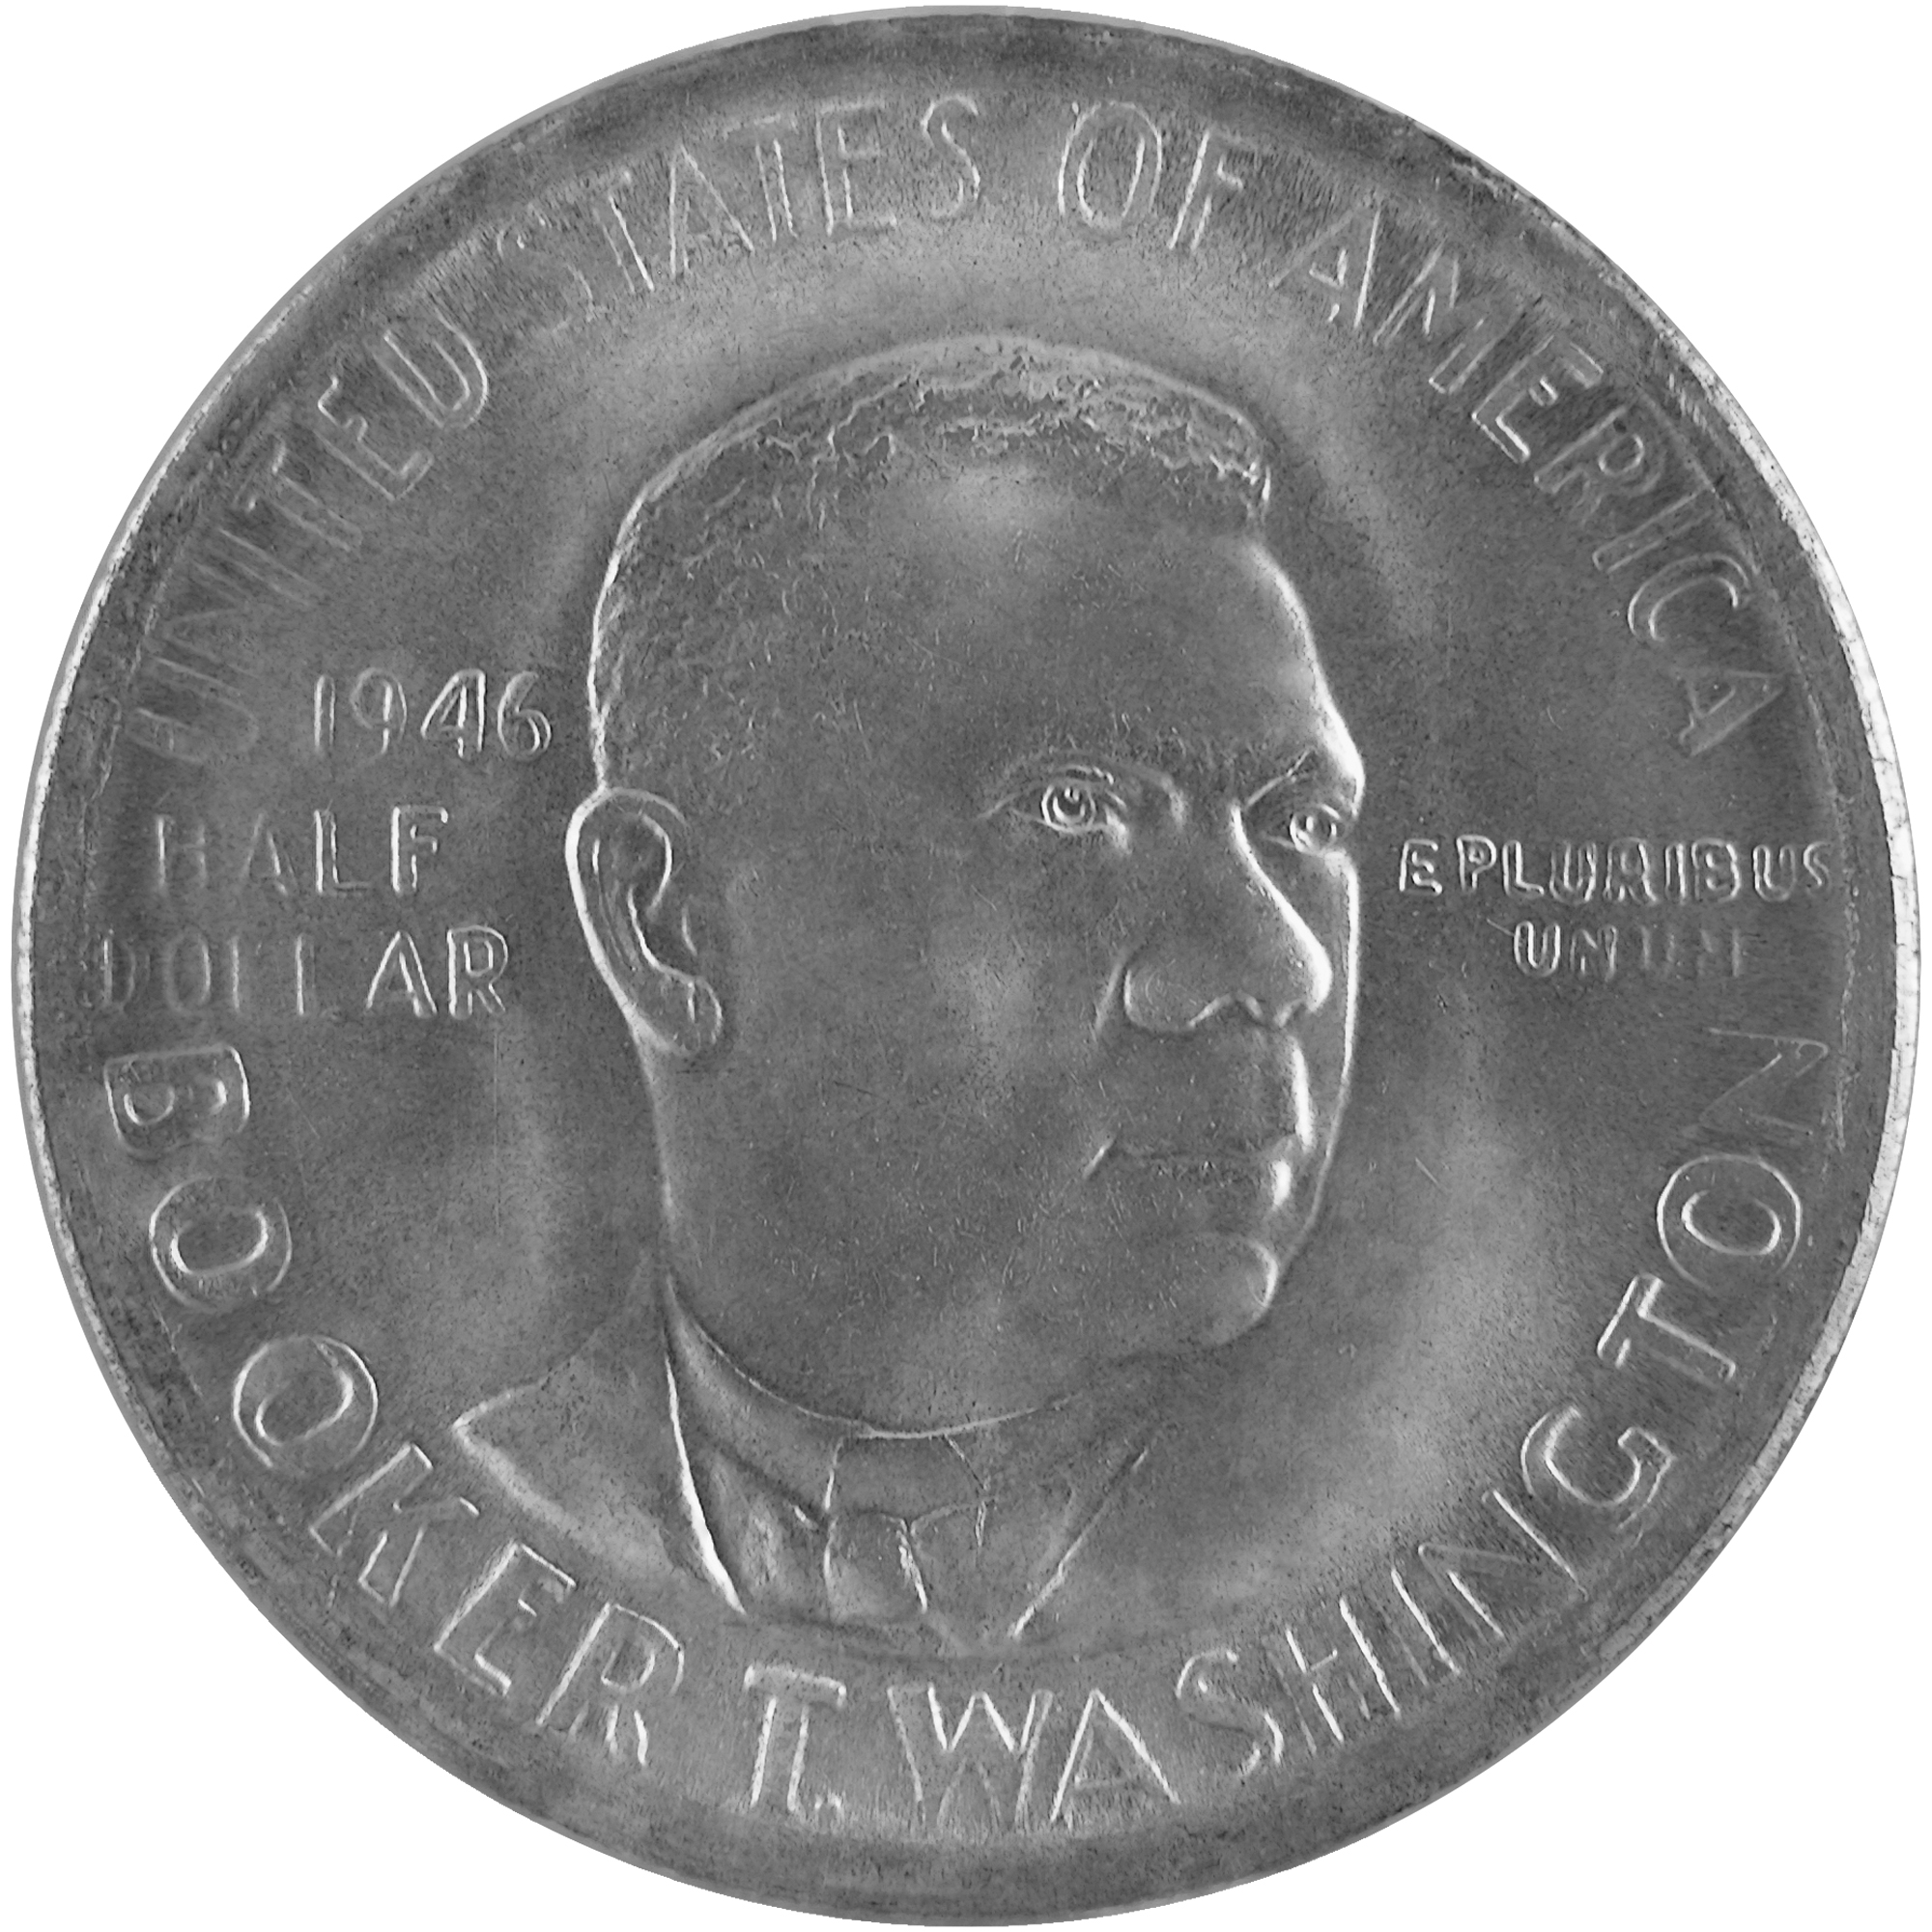 1946 Booker T. Washington Commemorative Silver Half Dollar Coin Obverse